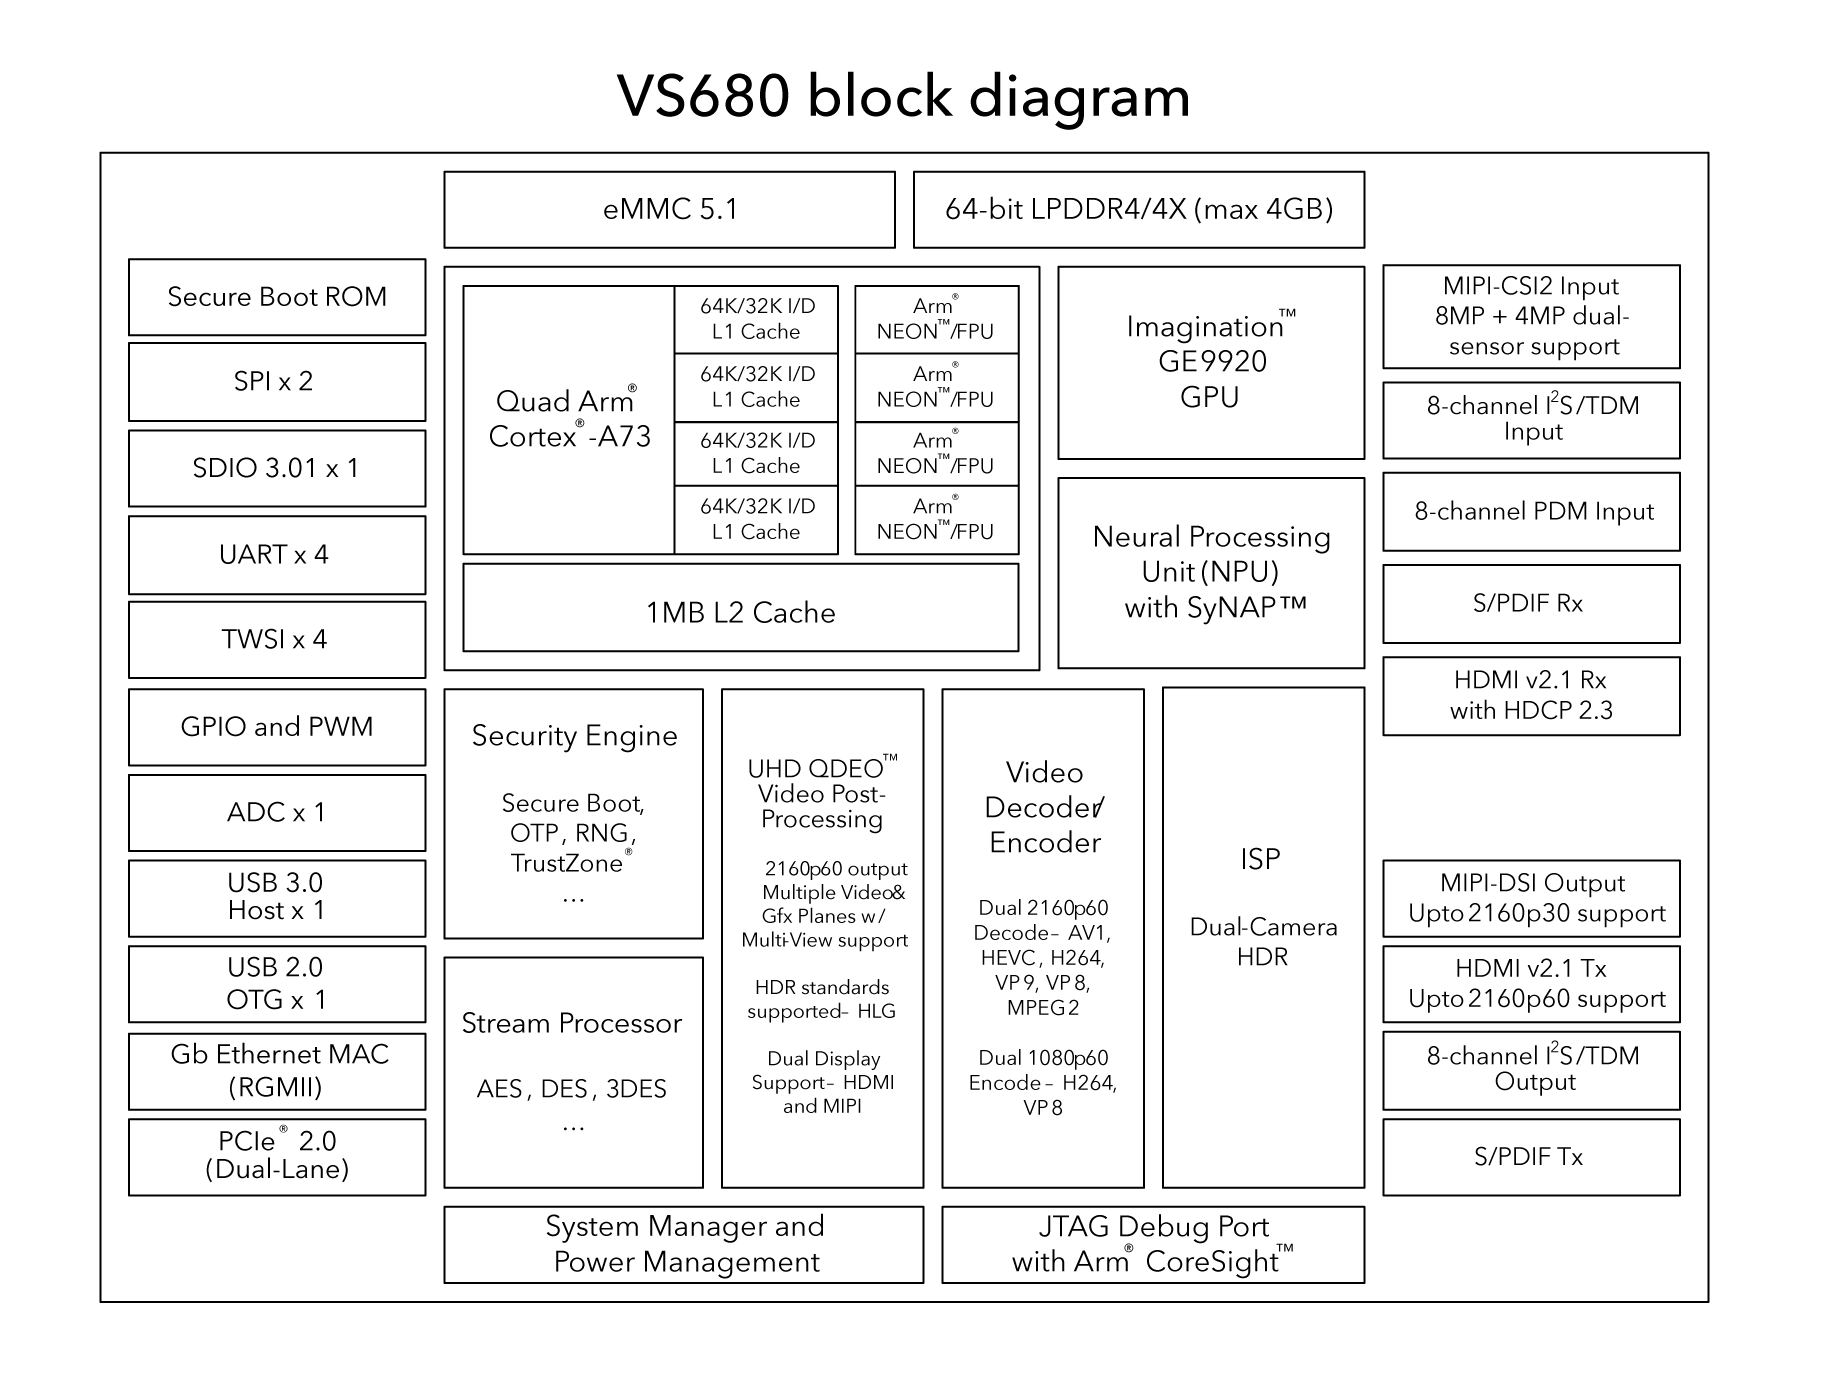 Need VS680 block diagram